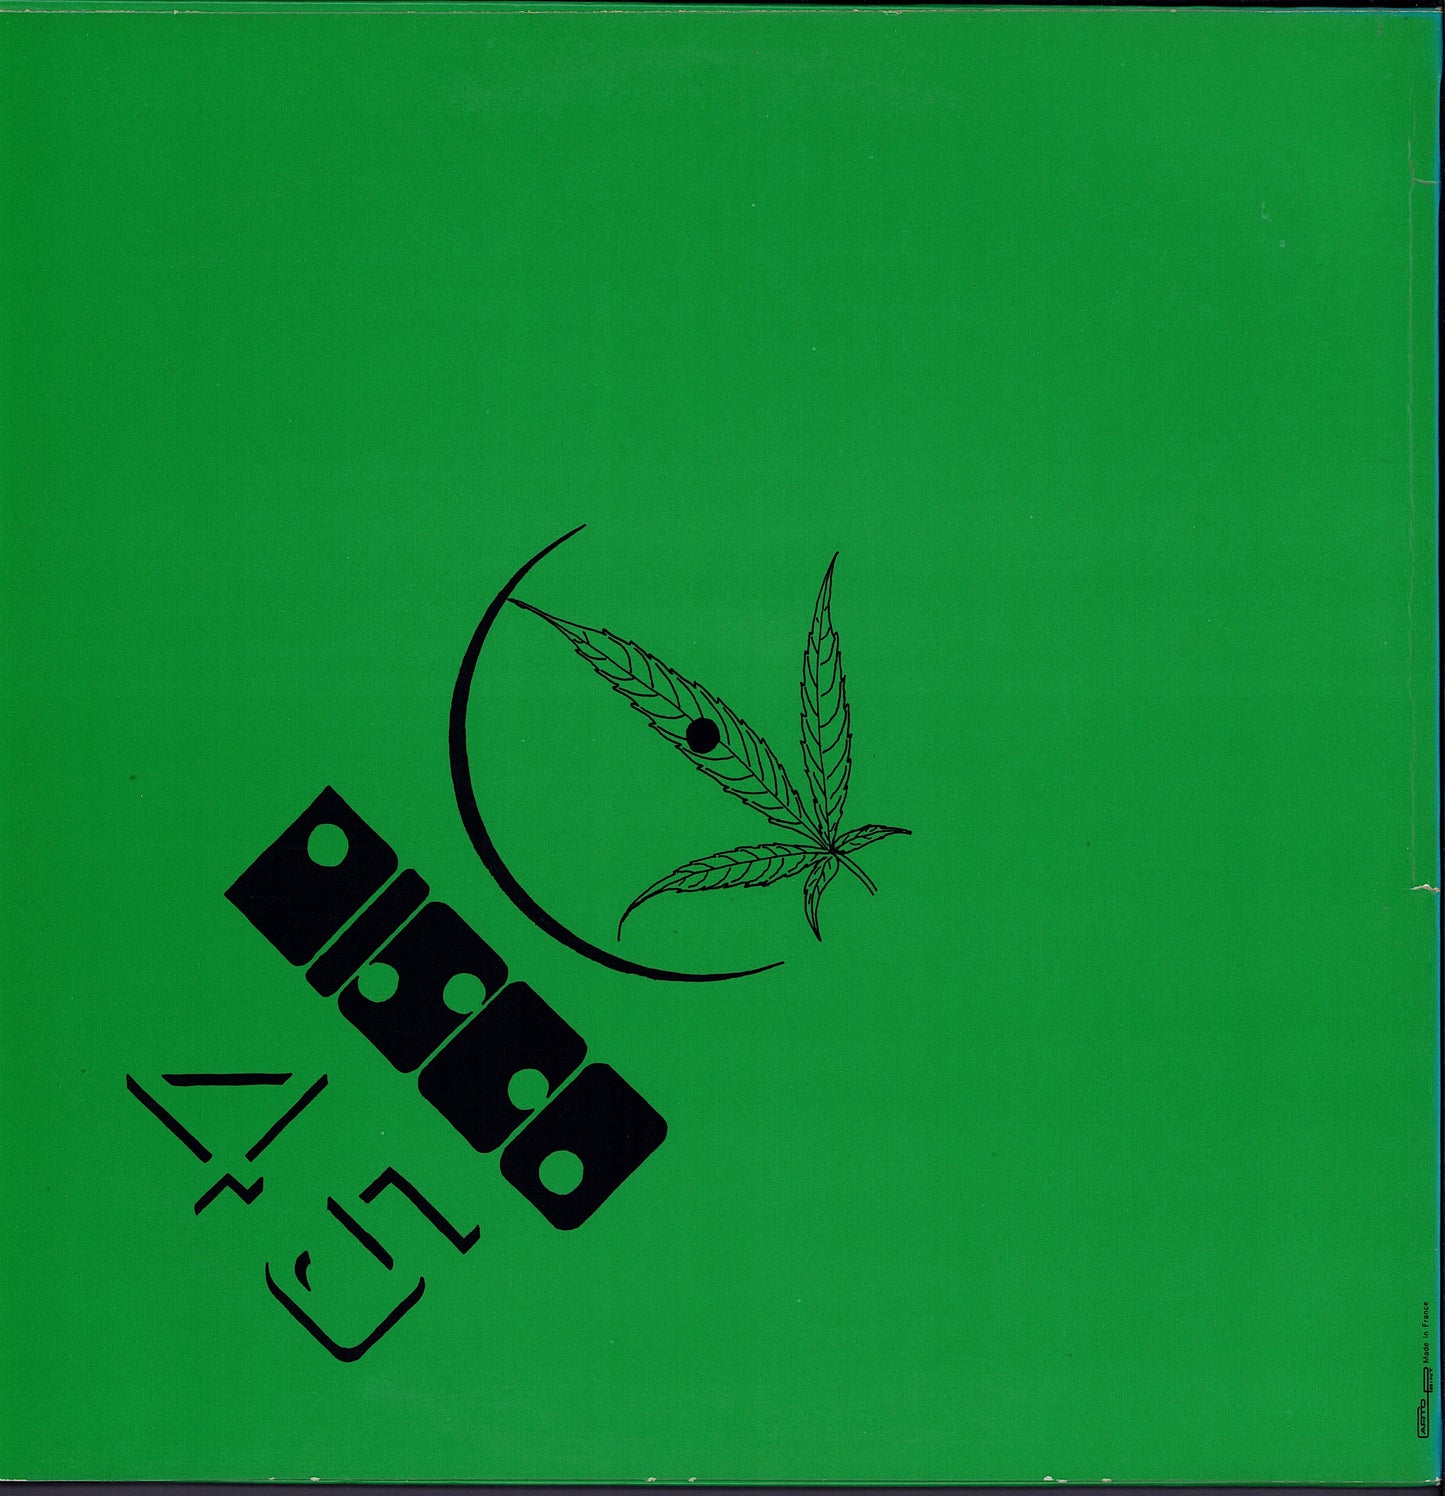 Sir Horatio - Abracadubra / Sommadub Vinyl 12" Maxi